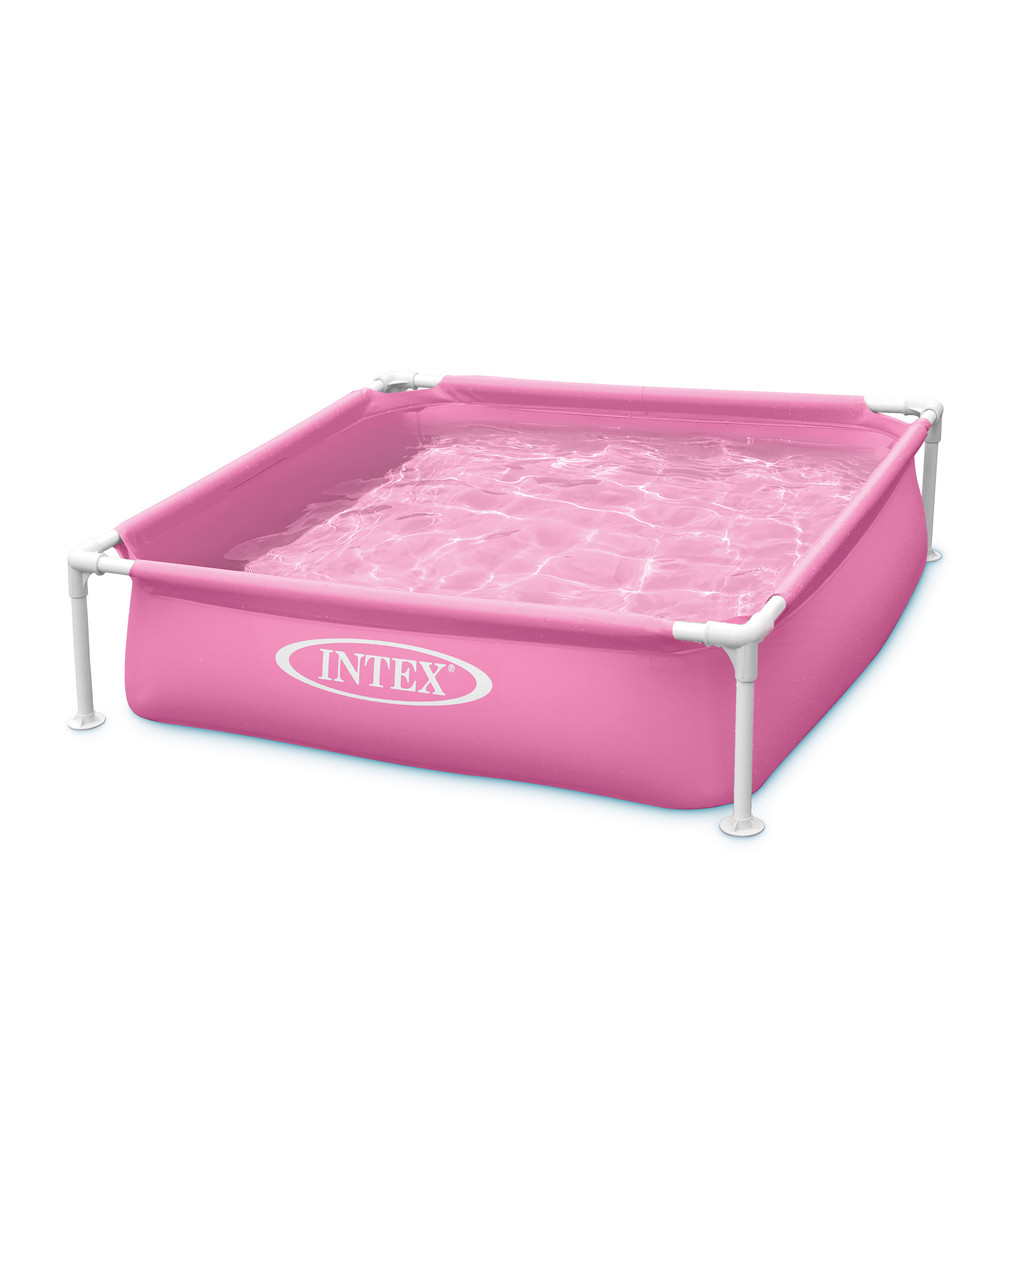 INTEX Pink Mini Frame™ Above Ground Pool - 48